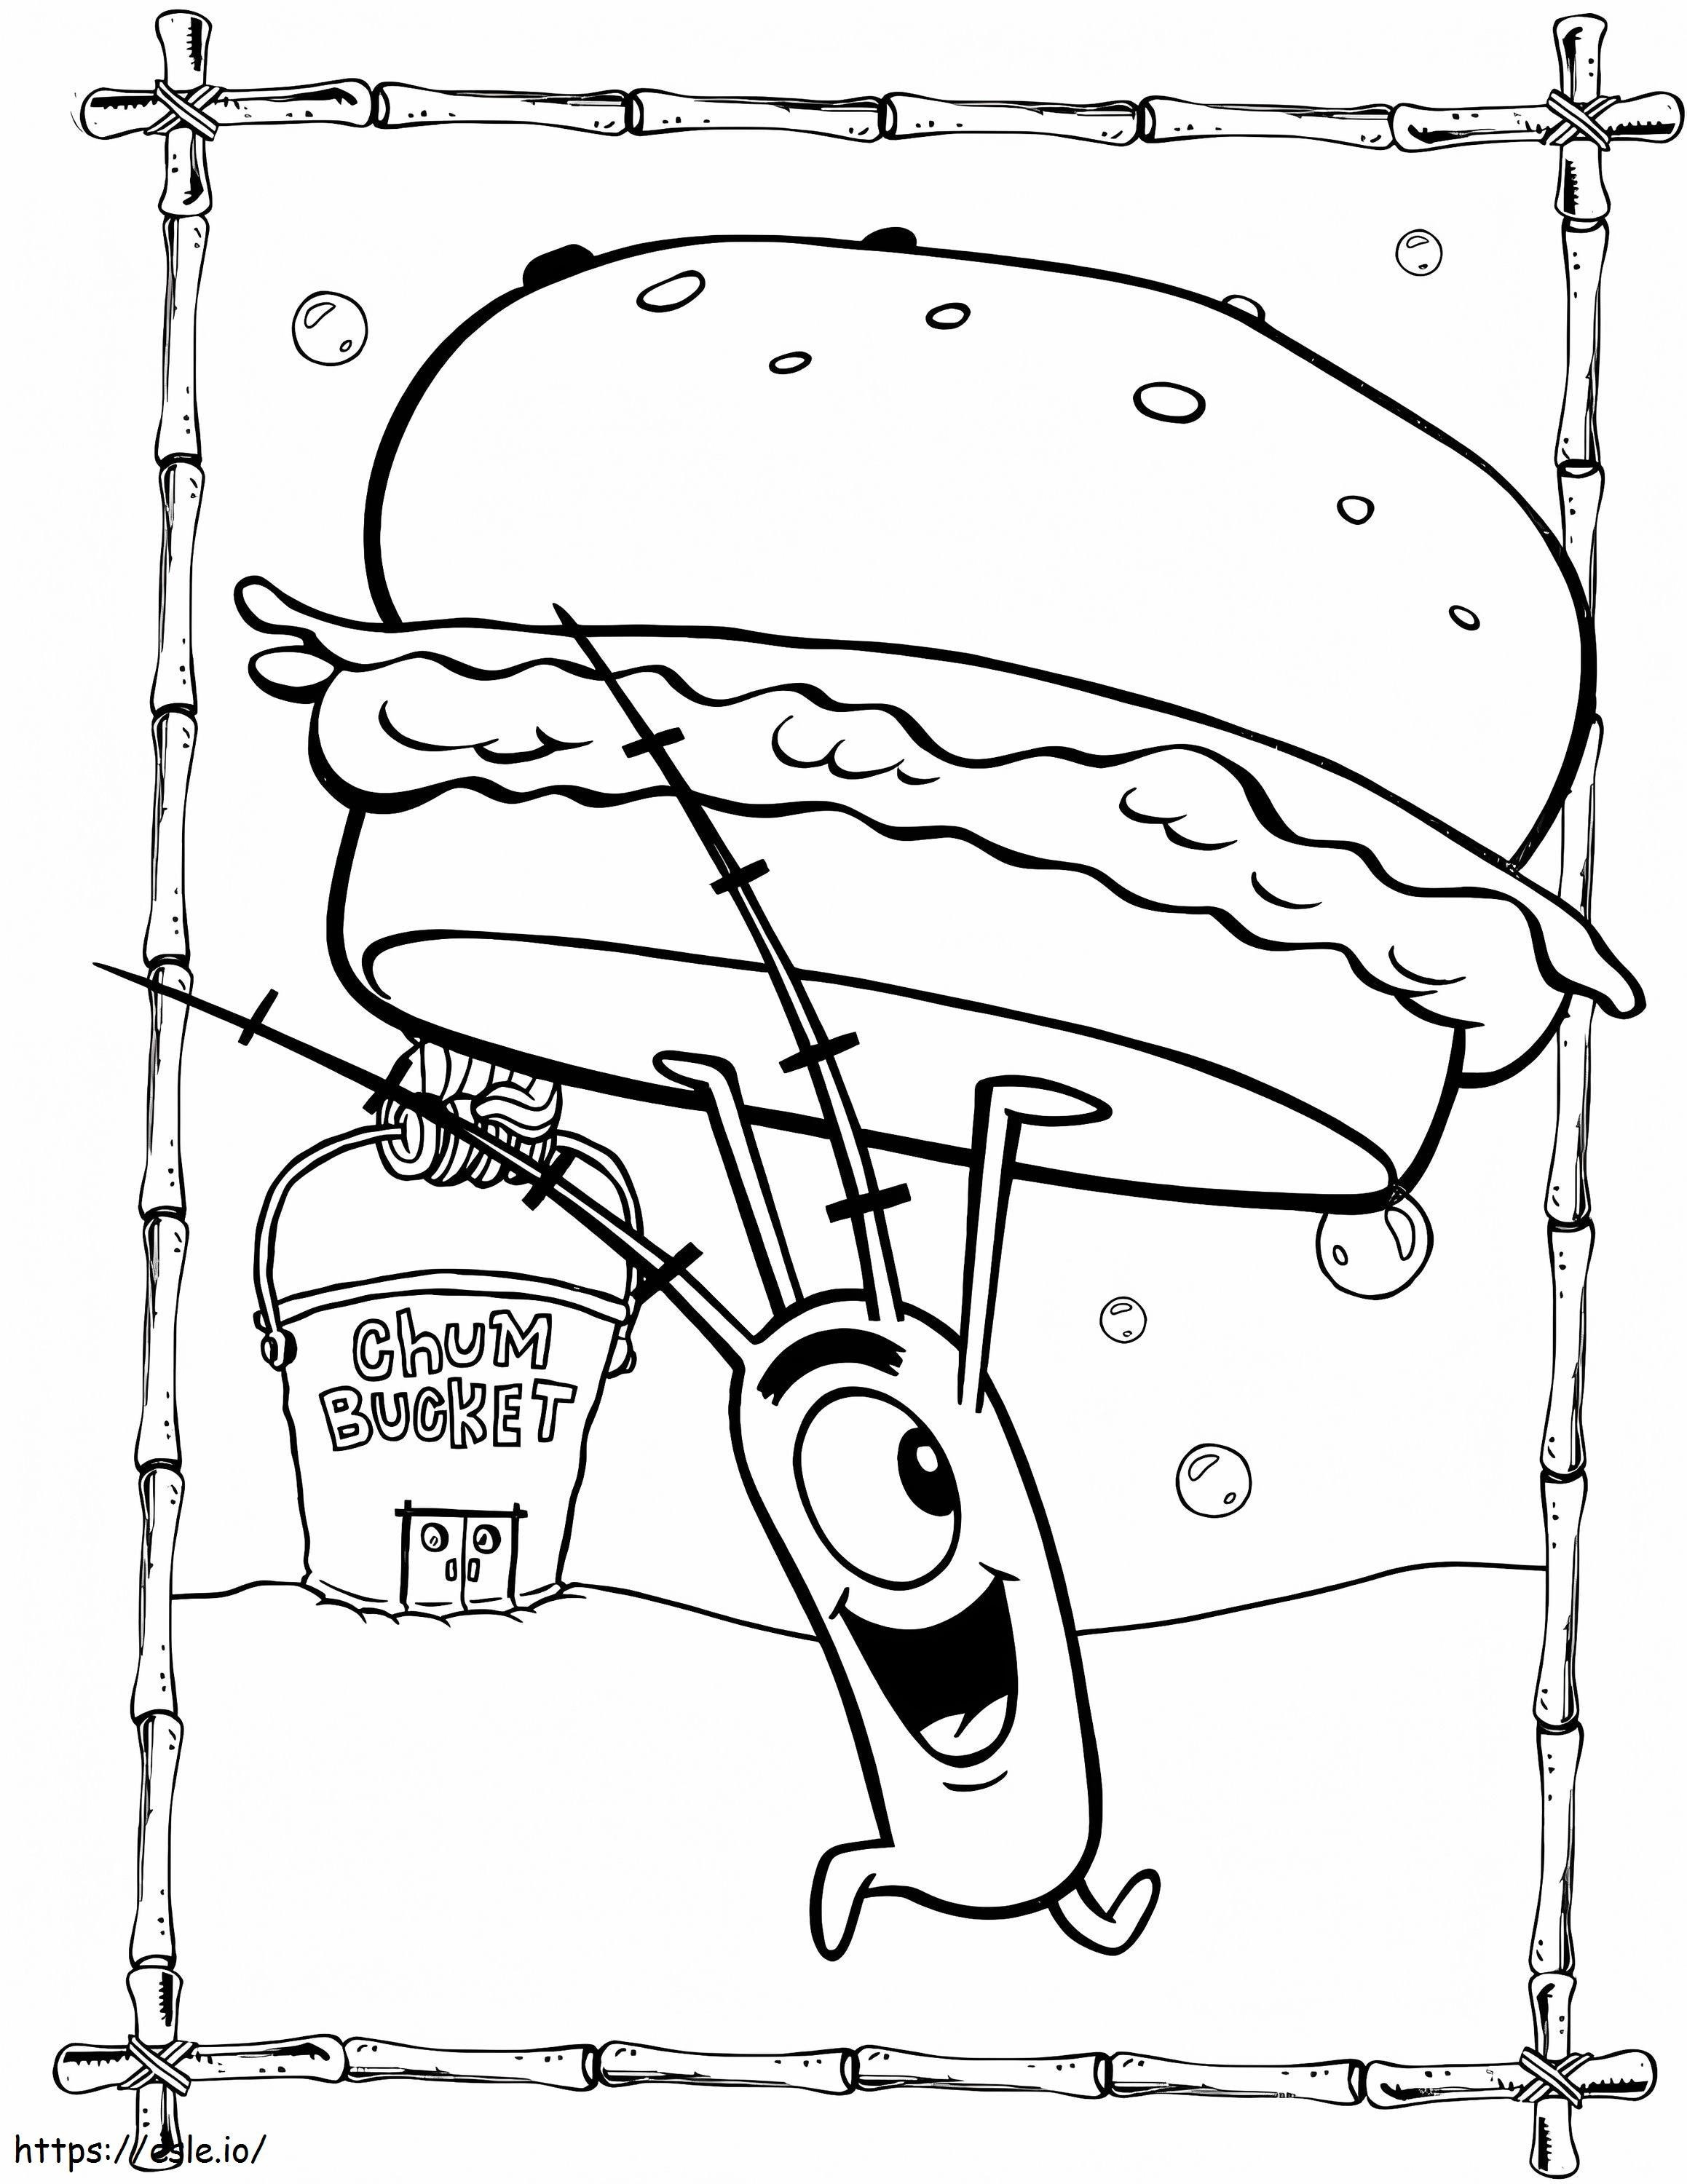 Plankton ve Hamburger boyama